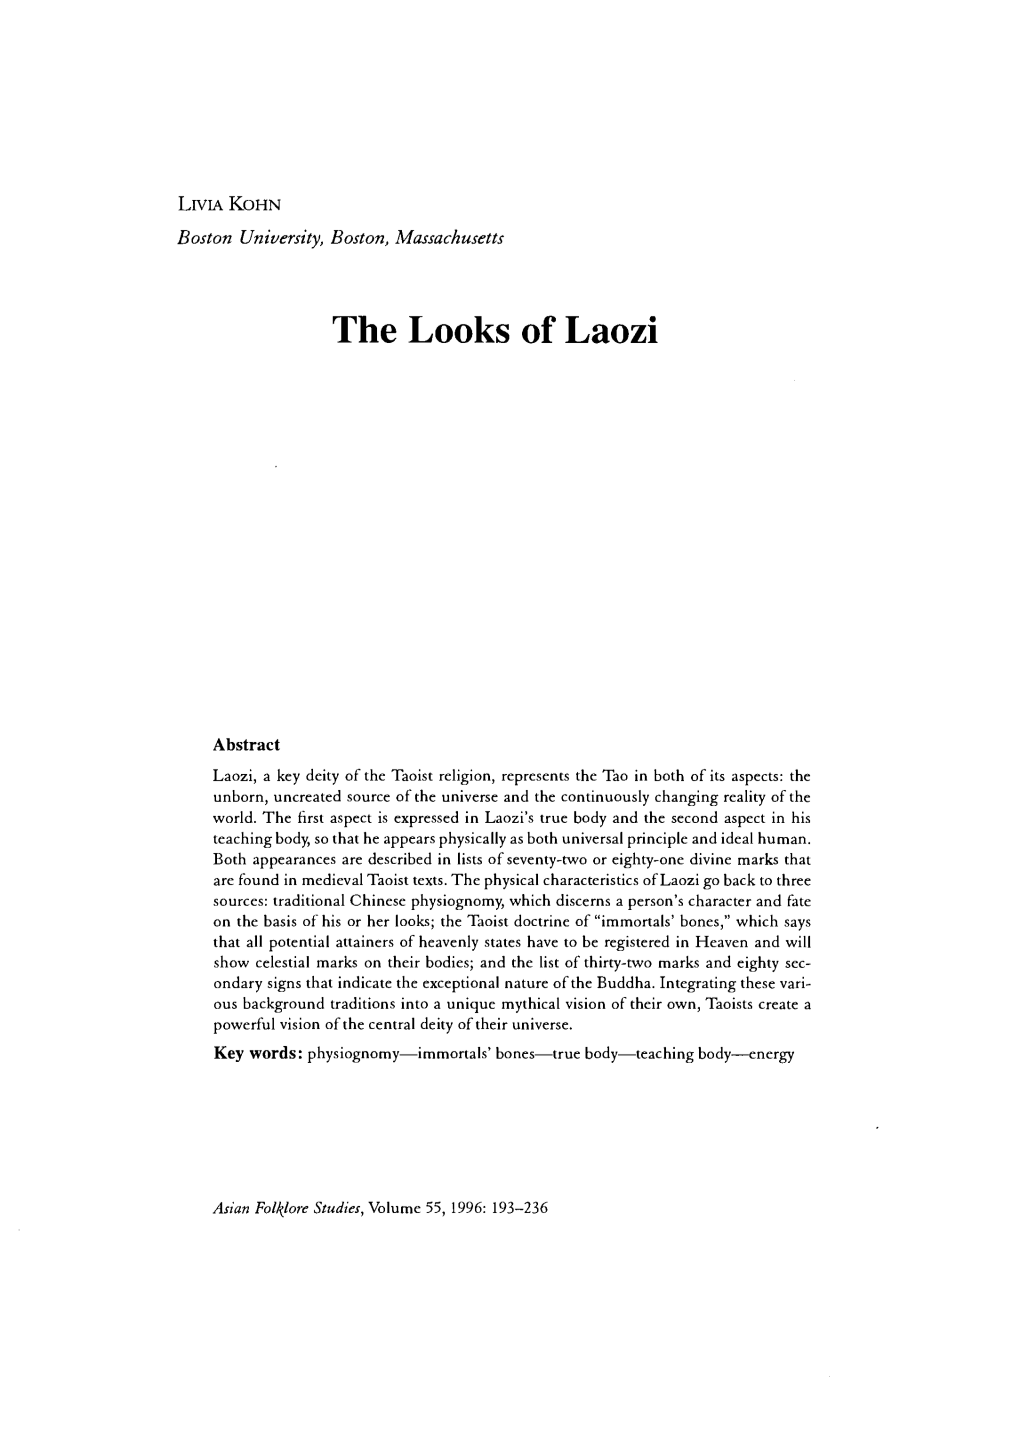 The Looks of Laozi